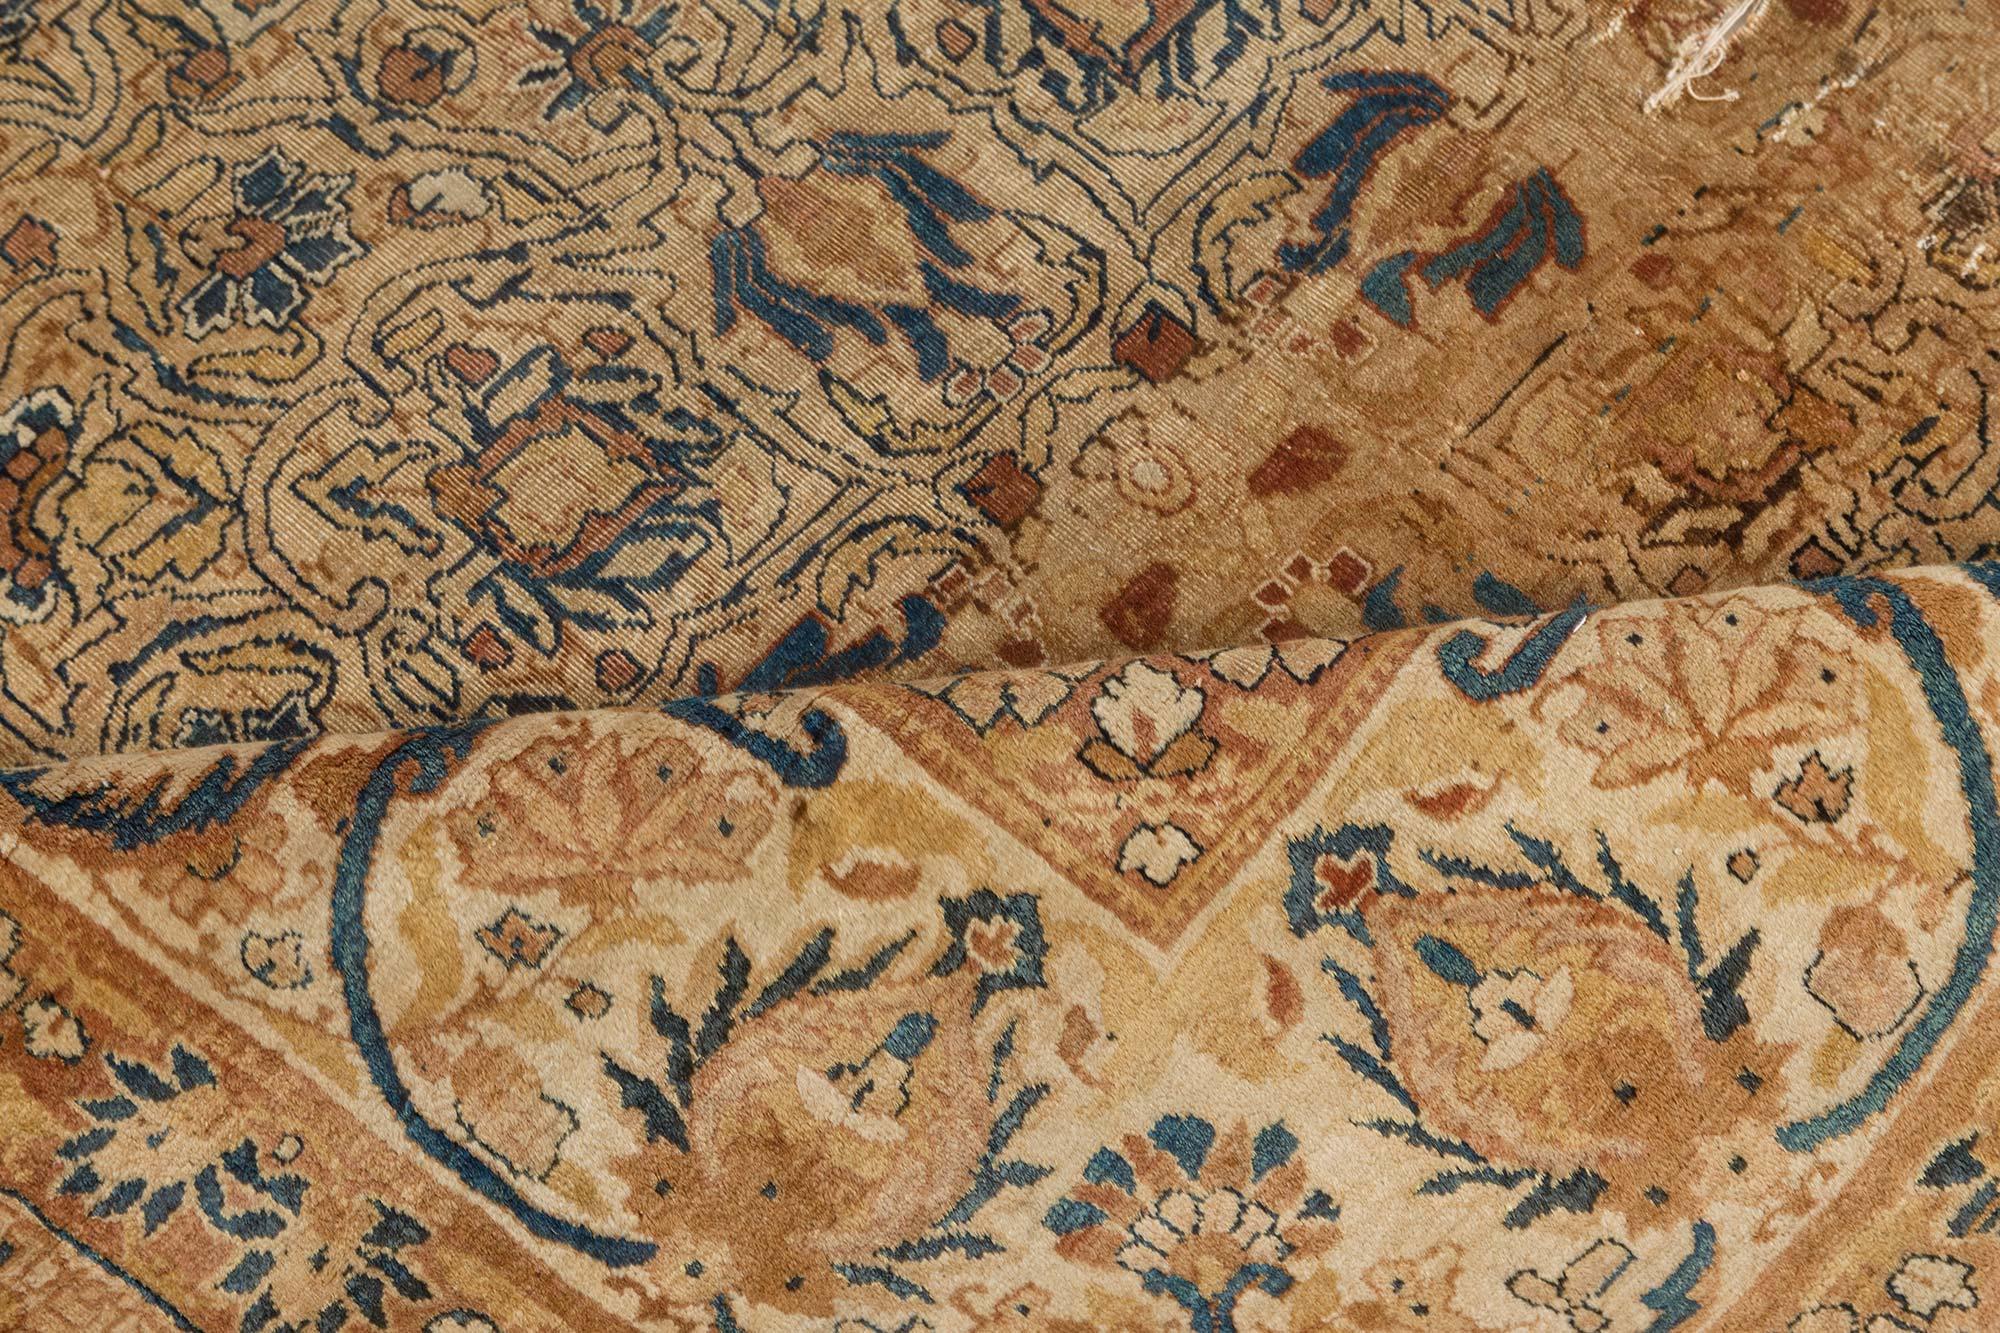 Authentic 19th century Persian Kirman handmade wool rug
Size: 10'9